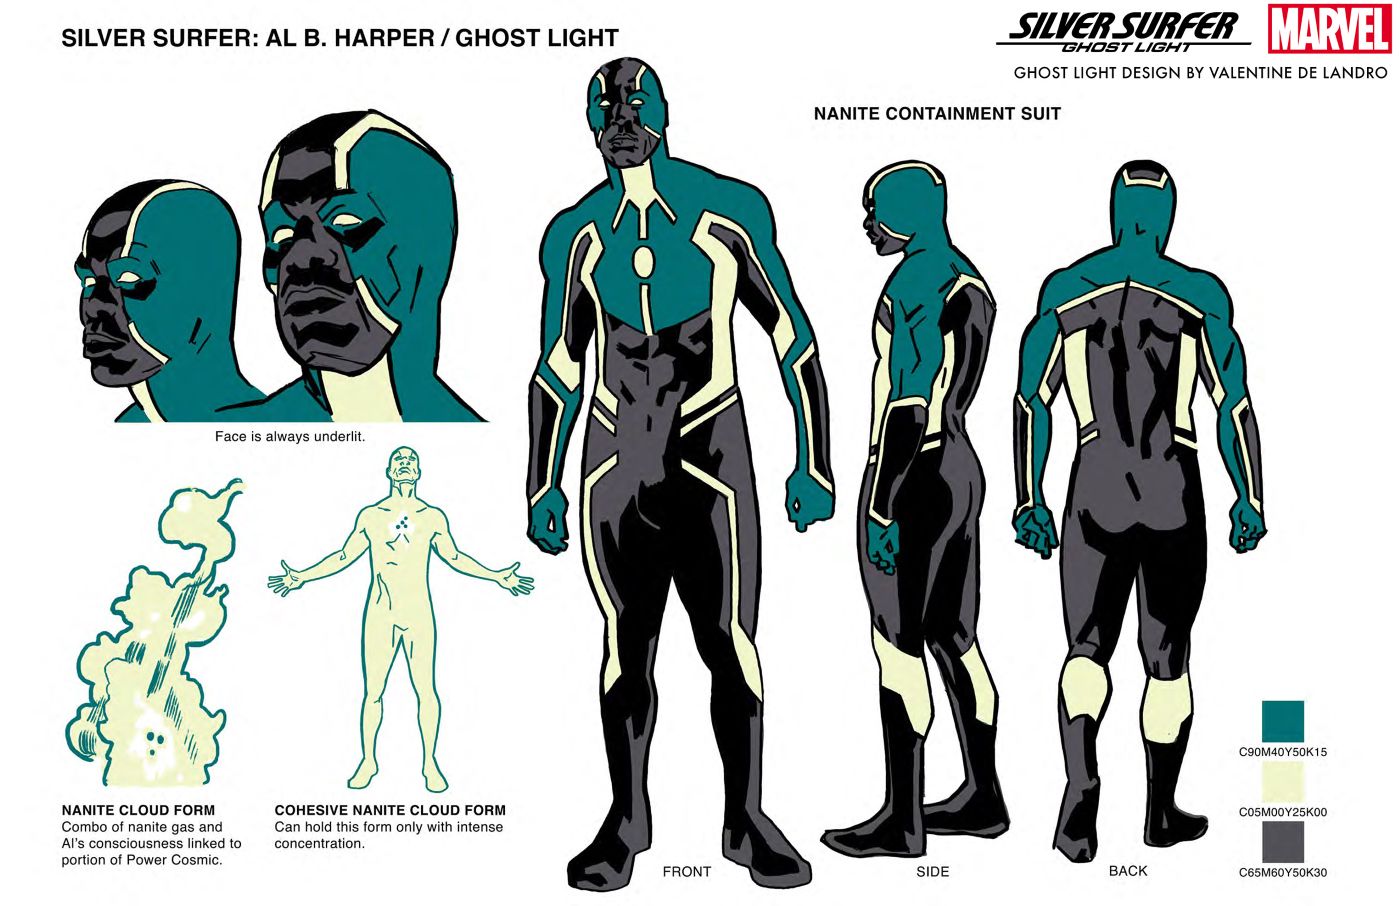 Ghost Light's new design in Marvel Comics